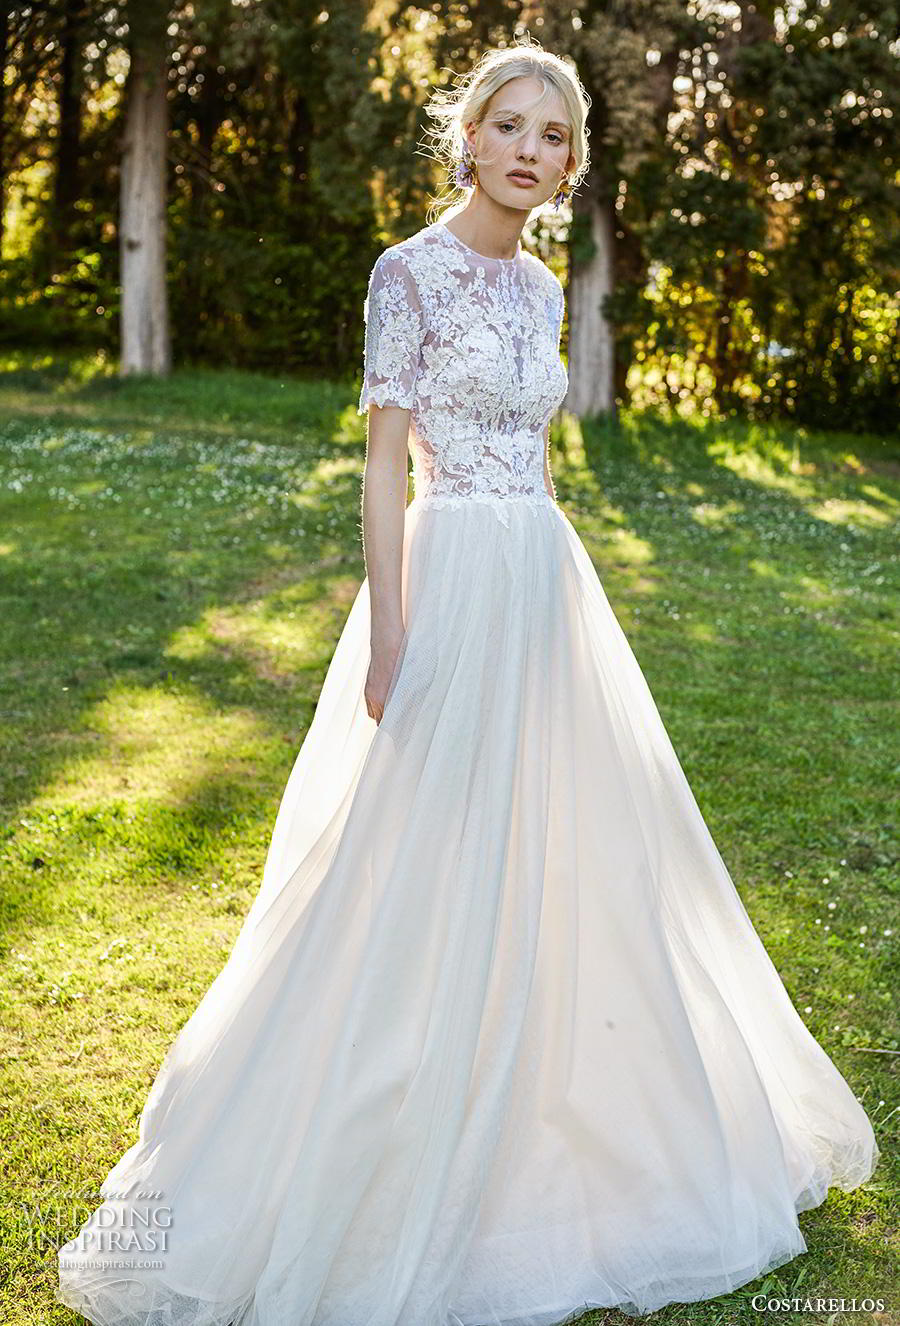 Wool Wedding Dress by Cortana via Wedding Inspirasi